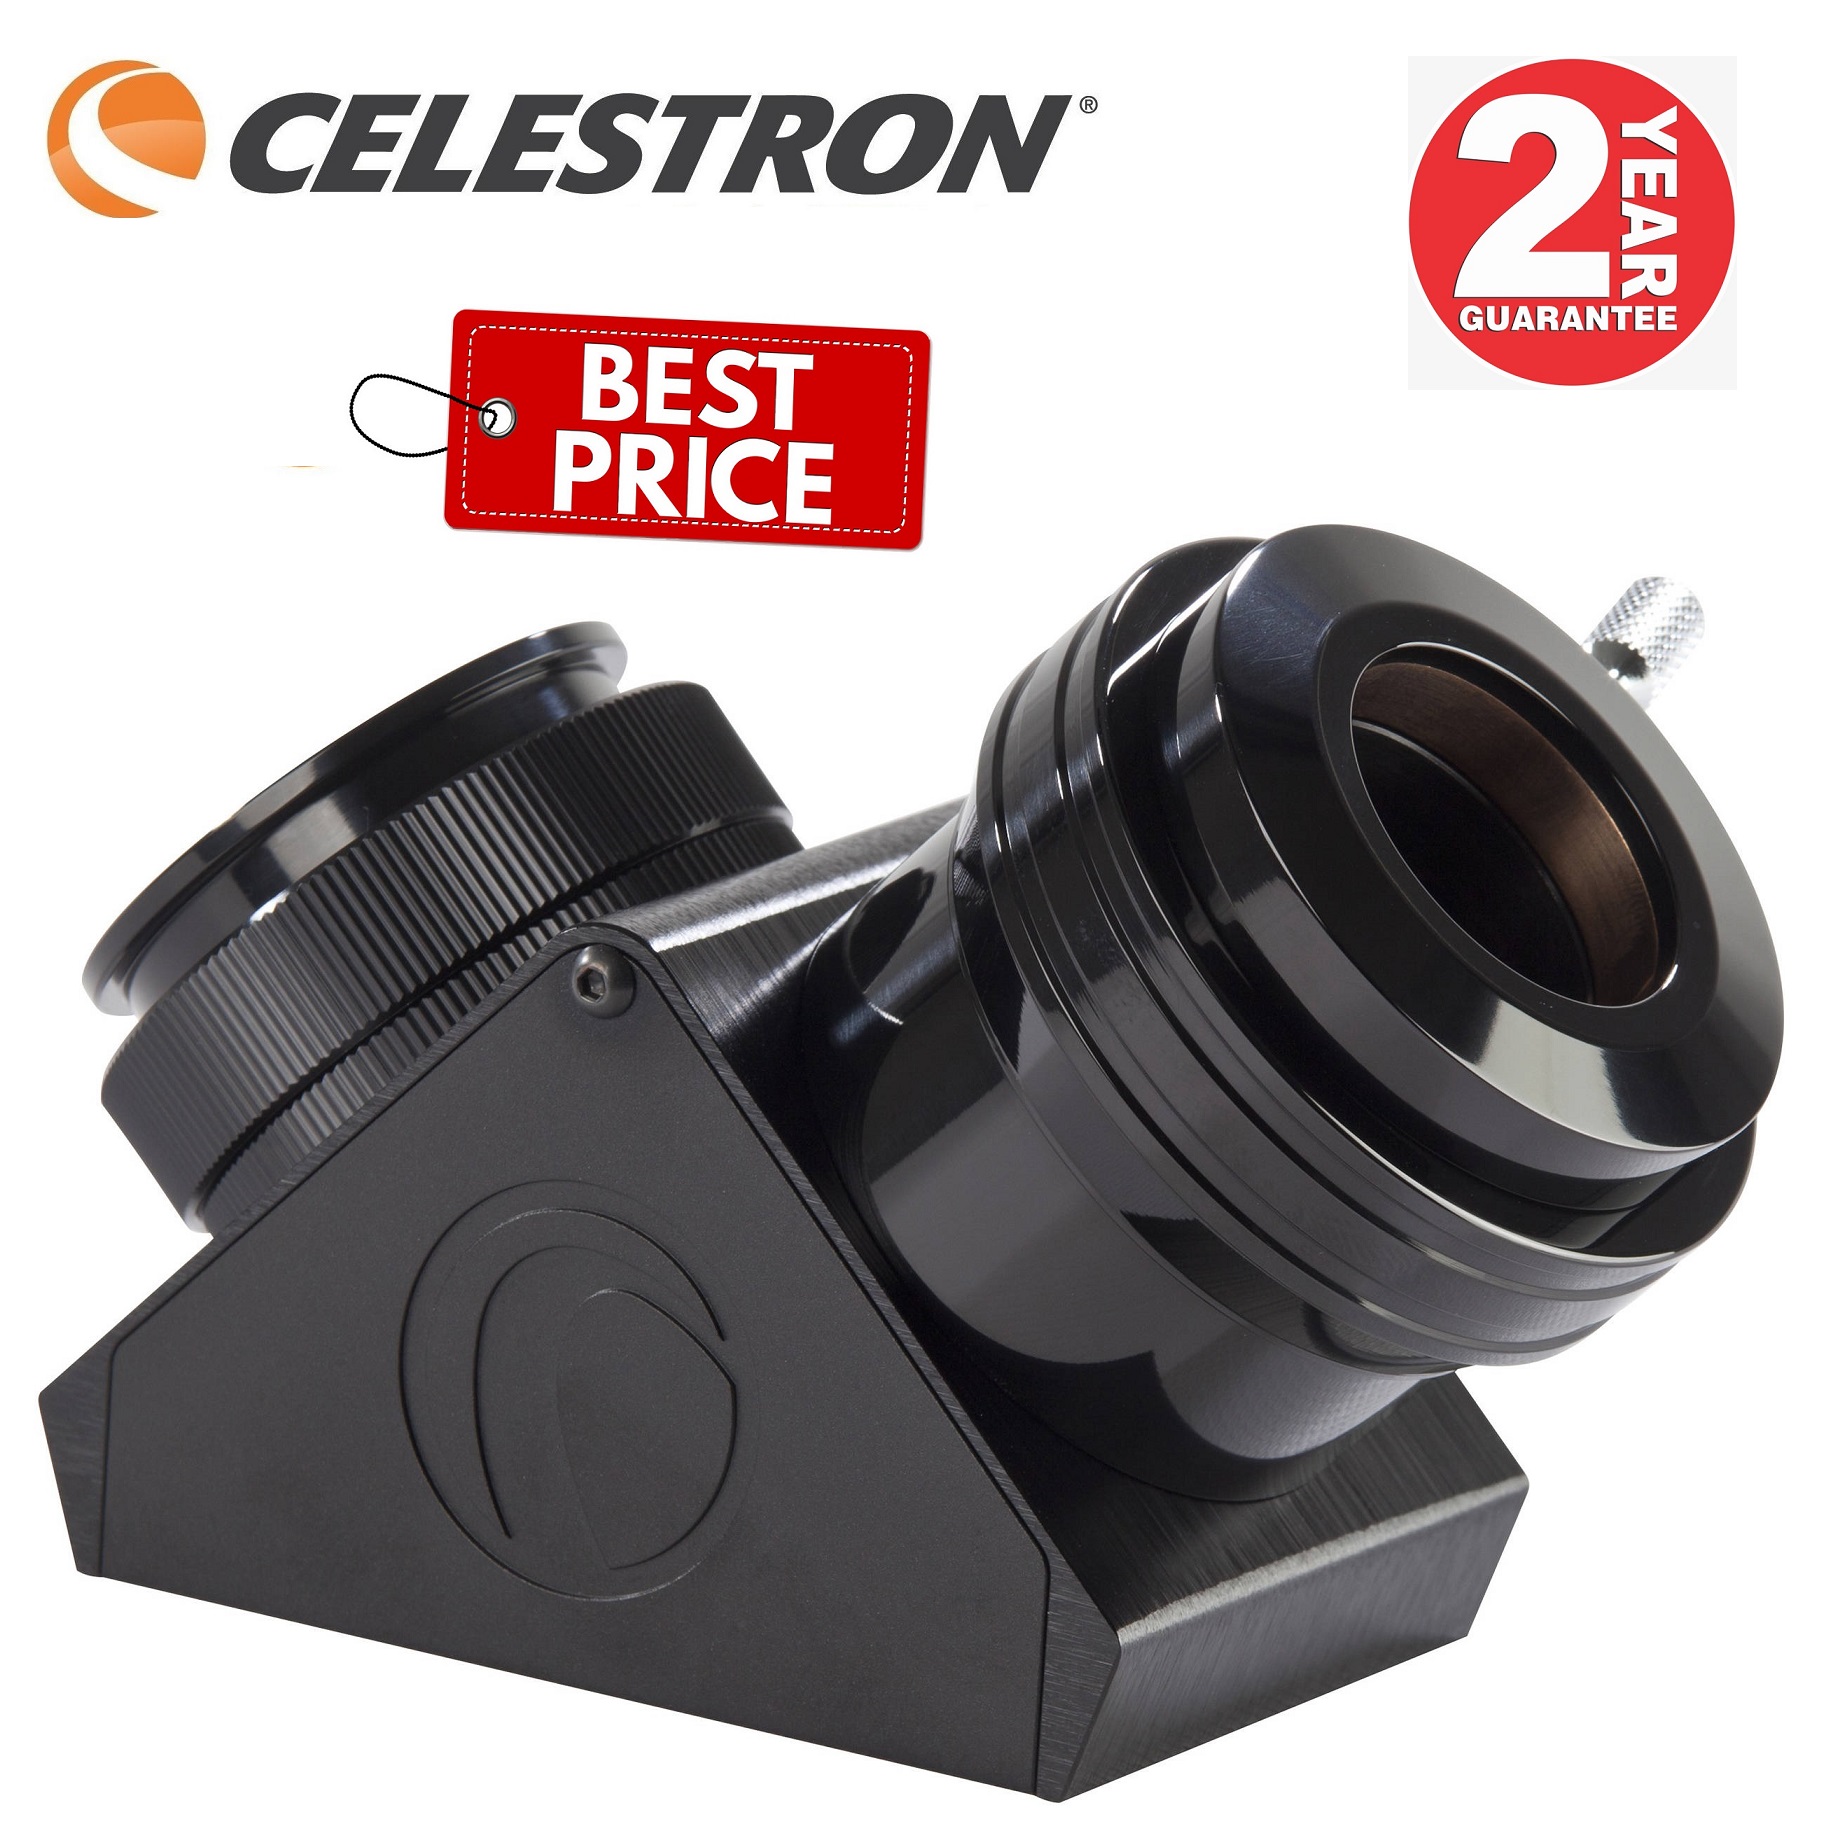 Celestron 2 Inch XLT Mirror Diagonal For SCT Telescopes